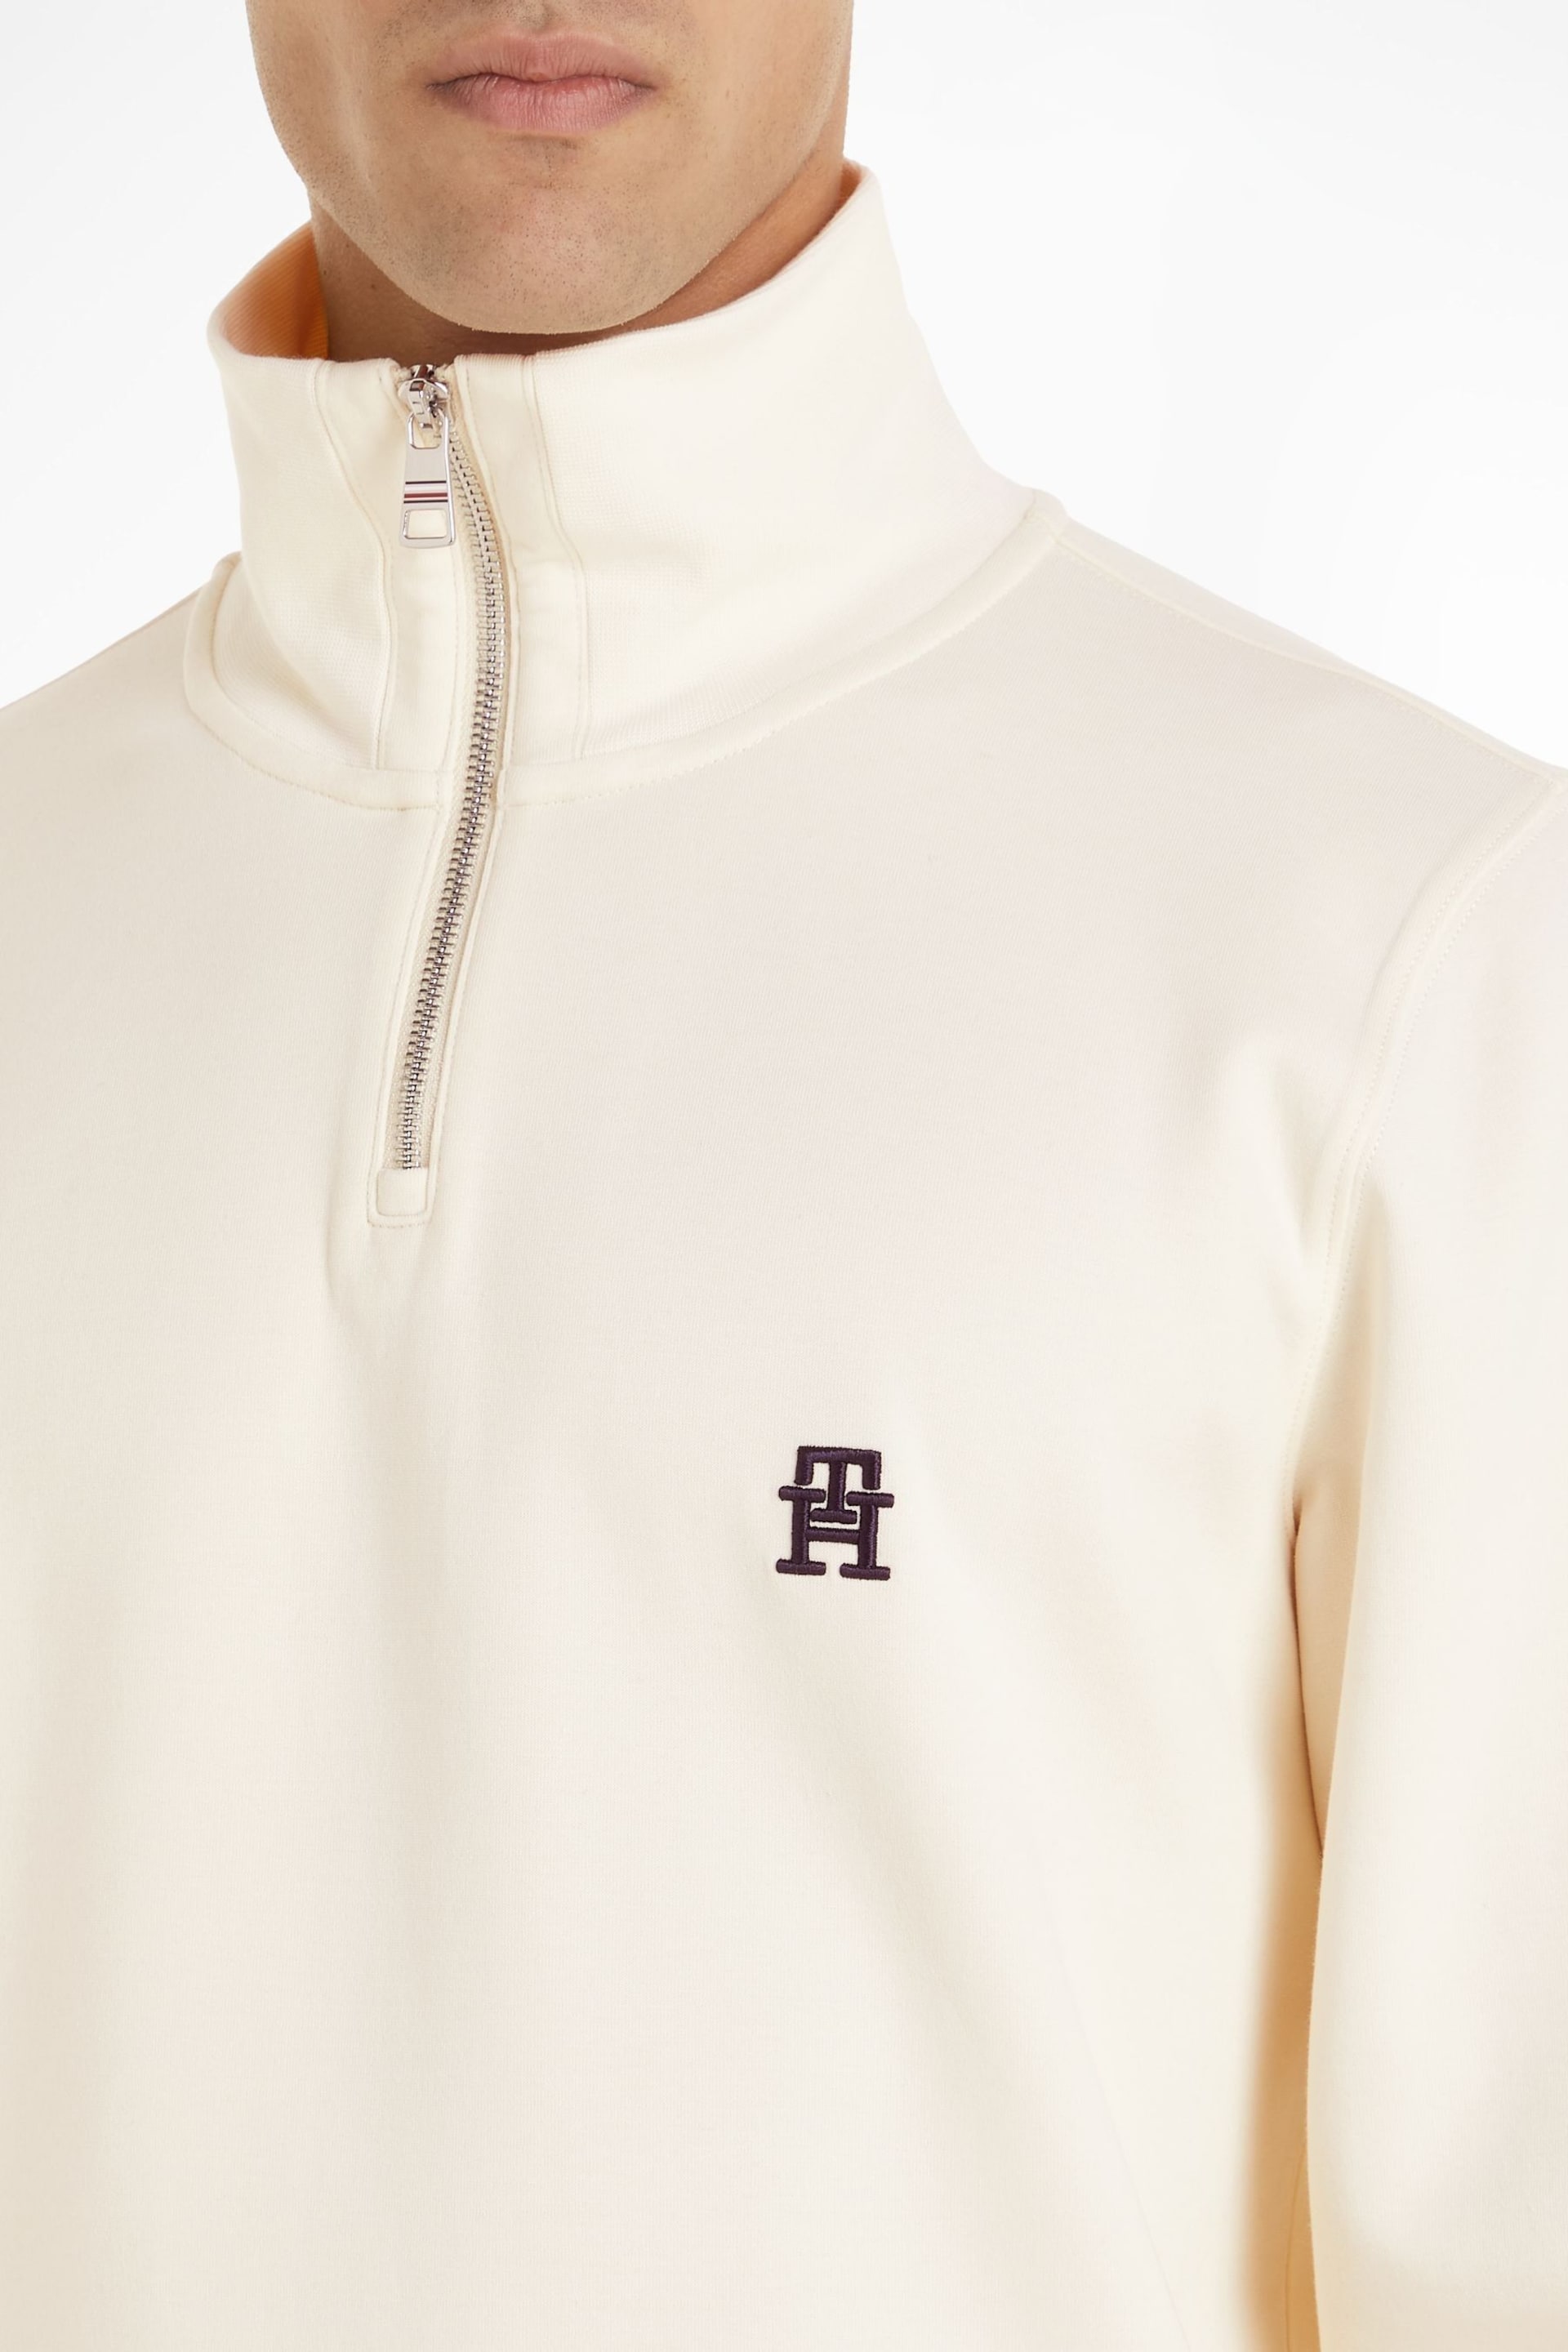 Tommy Hilfiger Monogram Cream Sweatshirt - Image 3 of 6